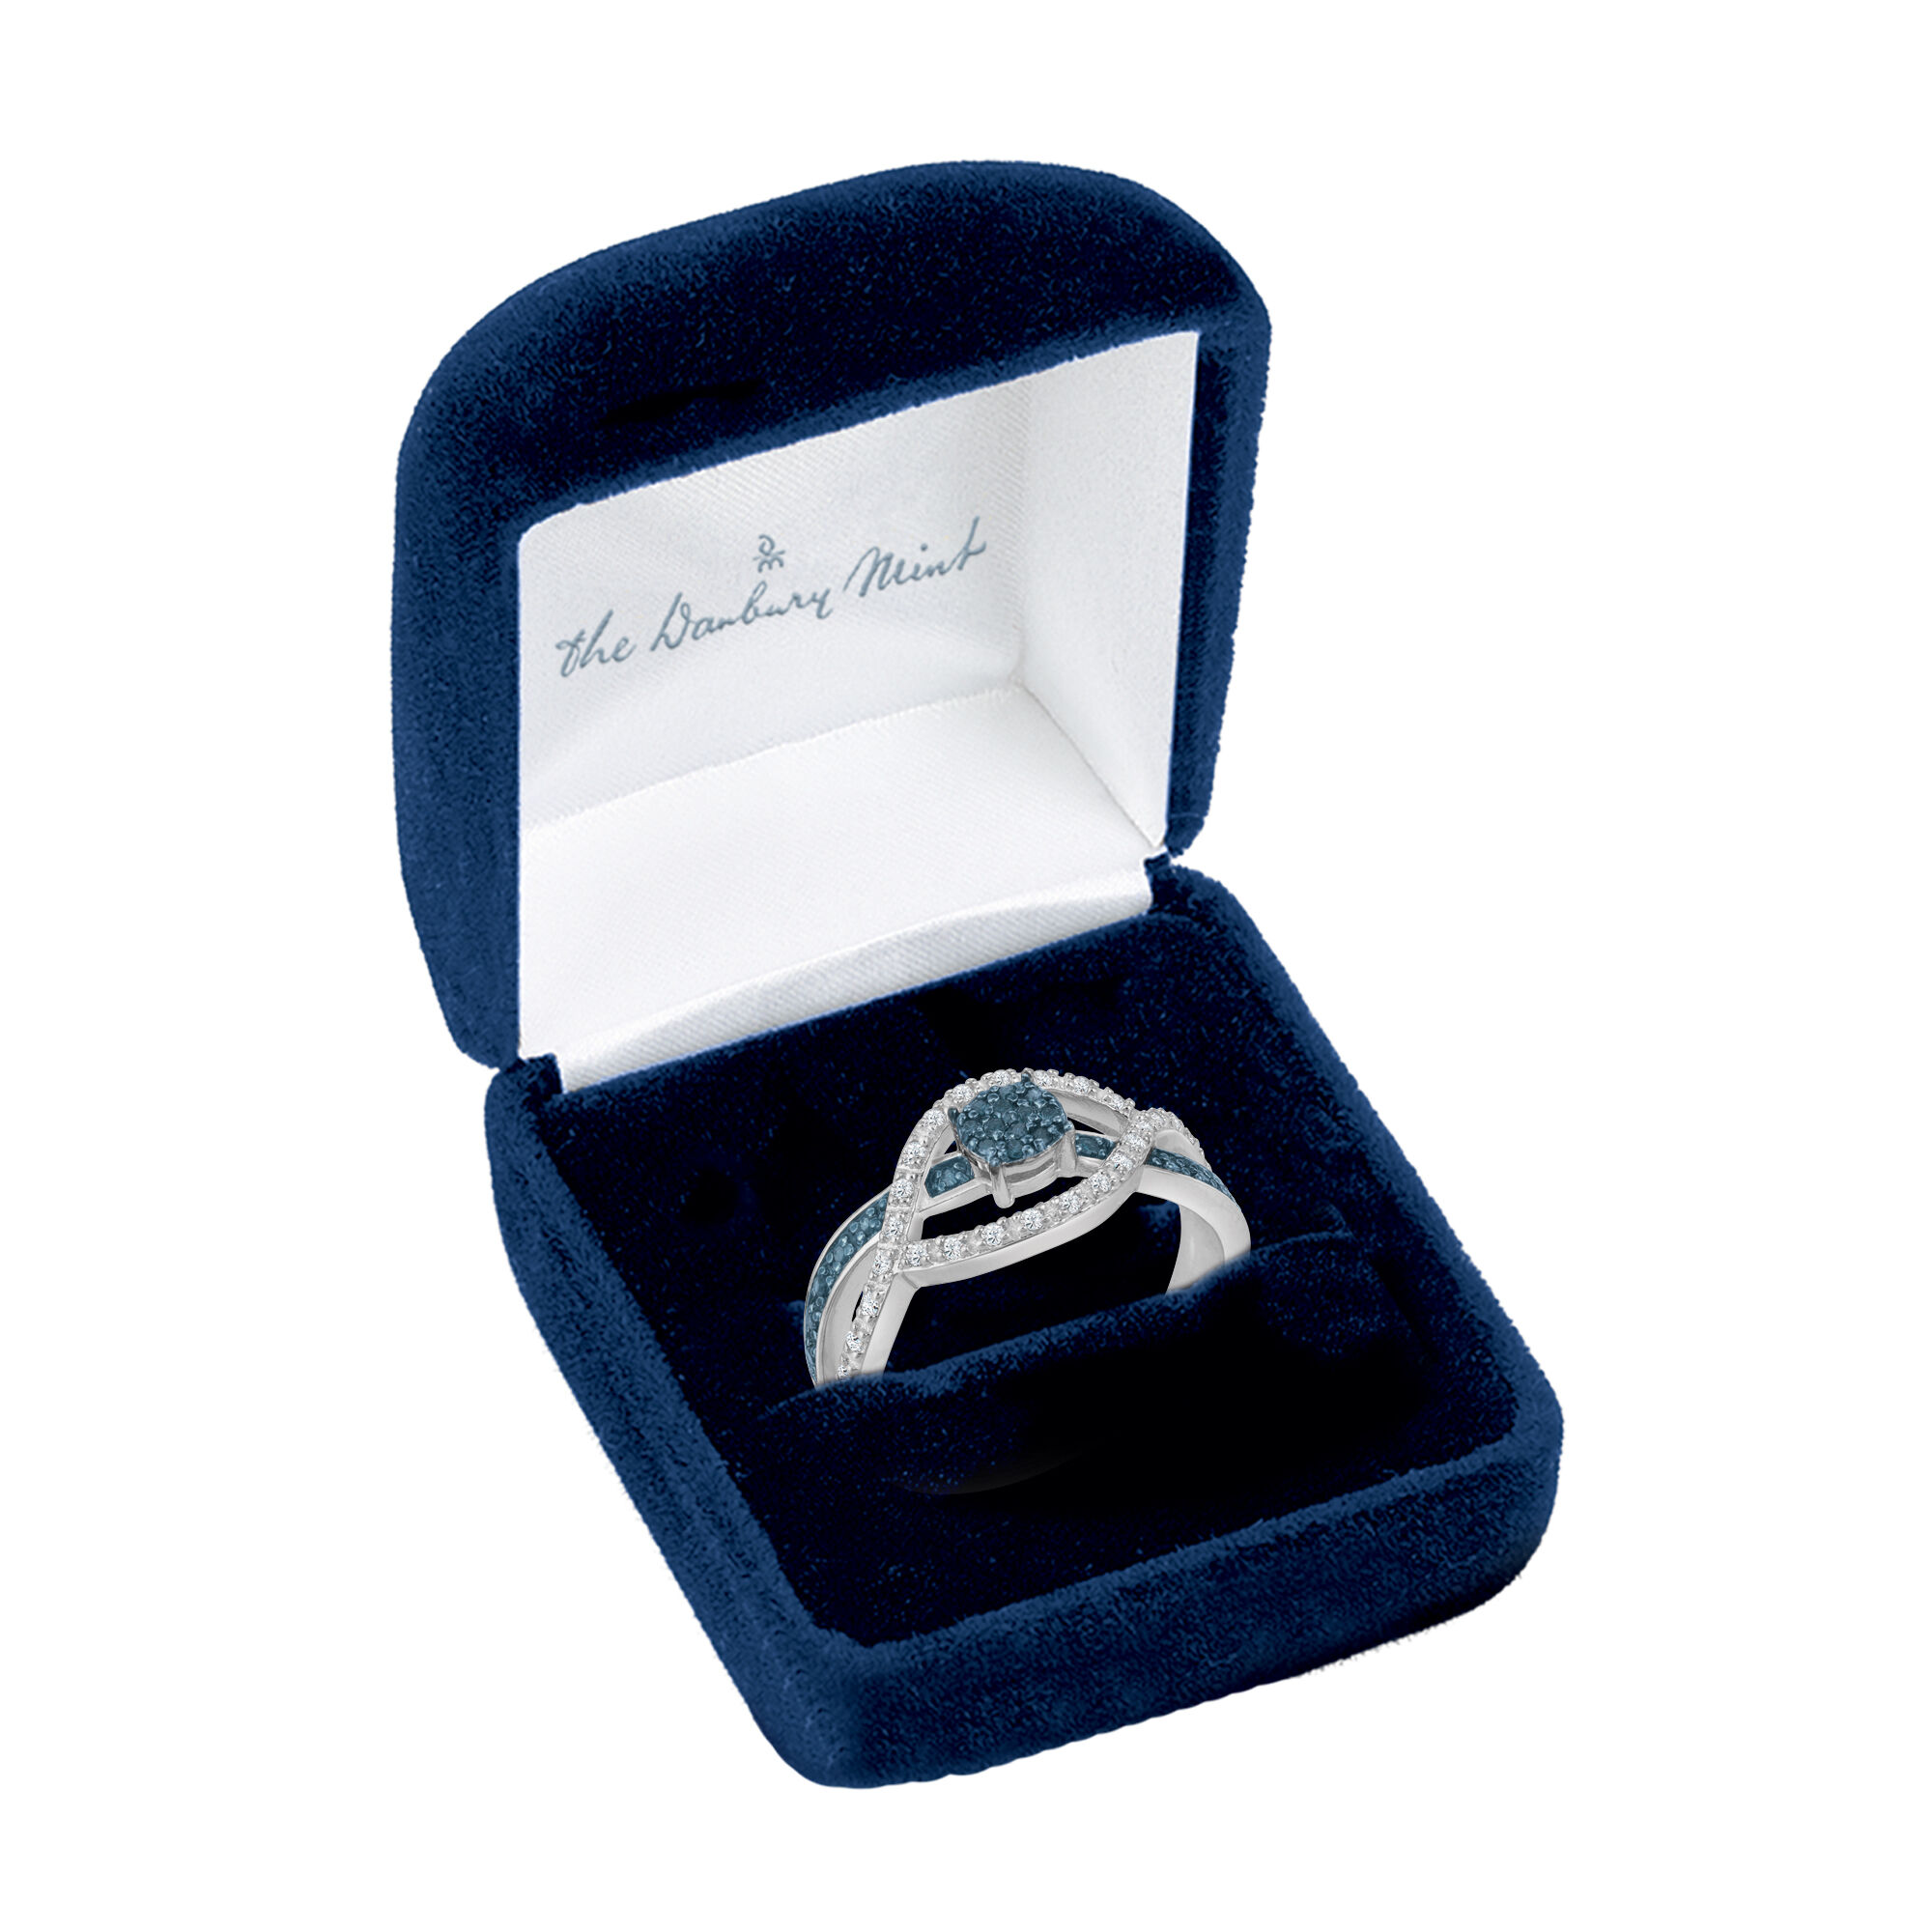 The Blue Wave Diamond Ring 11067 0023 g gift box